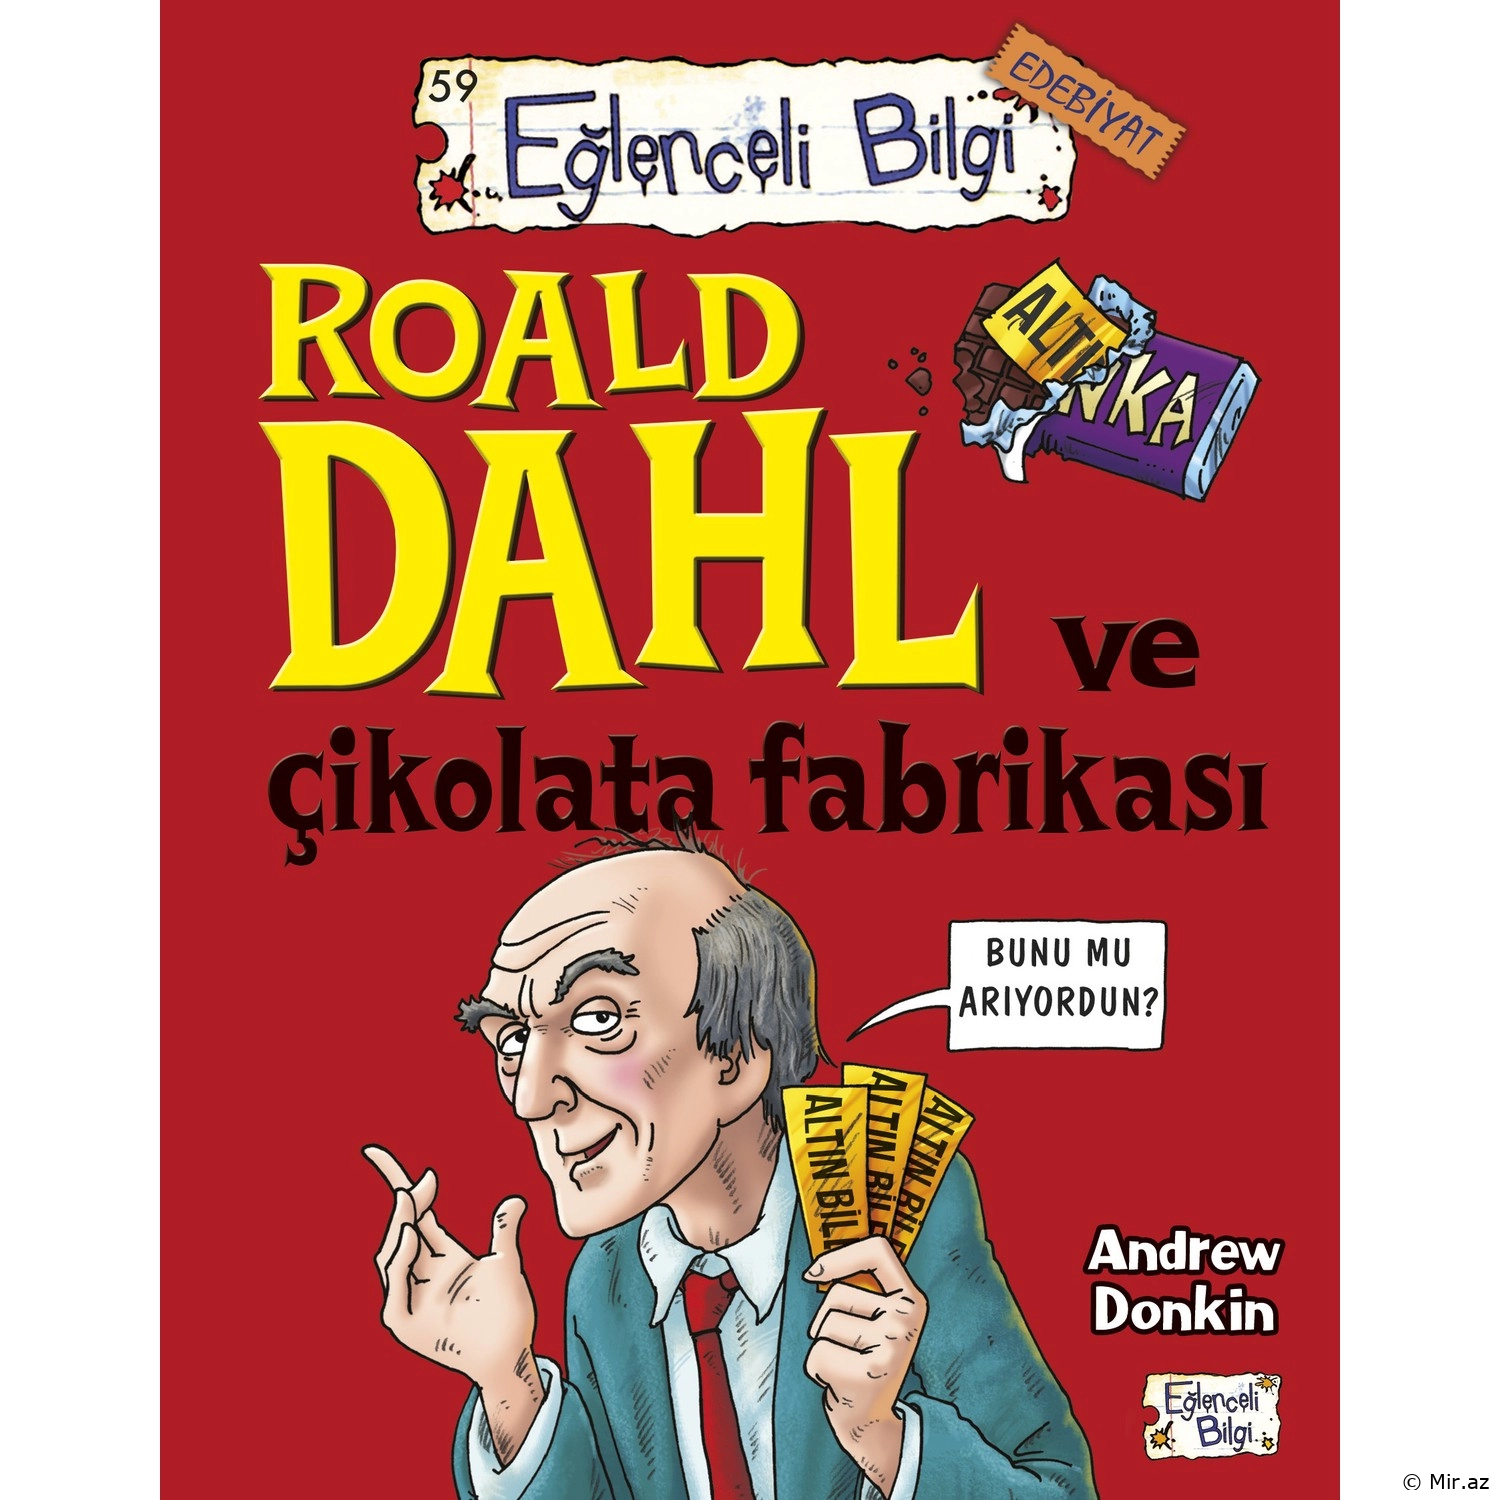 Roald Dahl "Charlie'nin Çikolata Fabrikası" PDF